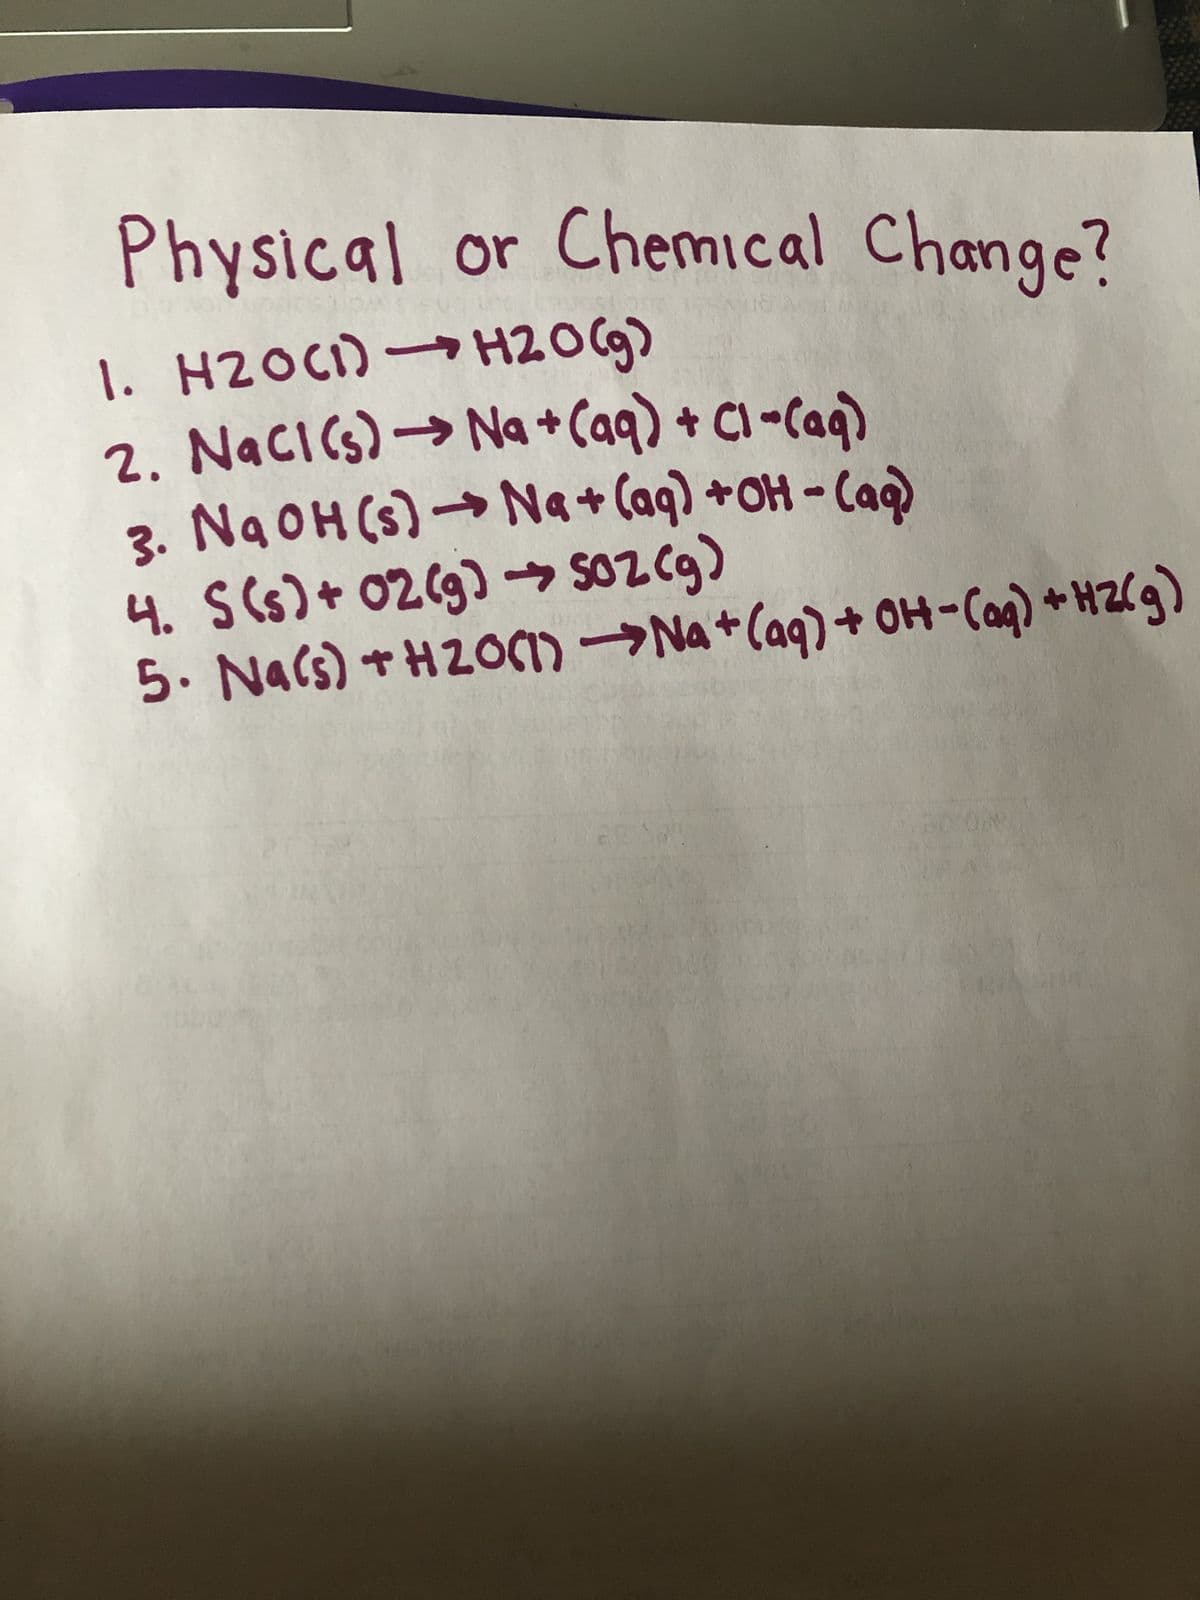 Physical or Chemical Change?
1. H2OCI)→ H2O(g)
2. NacI(s)→ Na +Caq) + Cl -Caq)
1206
Na+(aq) +OH-Caq
3. NgOH(s)→ Na+ (aq) +OH - Caq)
4. S(s)+ 02(g] → SOzCg)
5. Nacs) t HZOM→Na+(aq) + OH-Caq) +HZ(g)
3.
